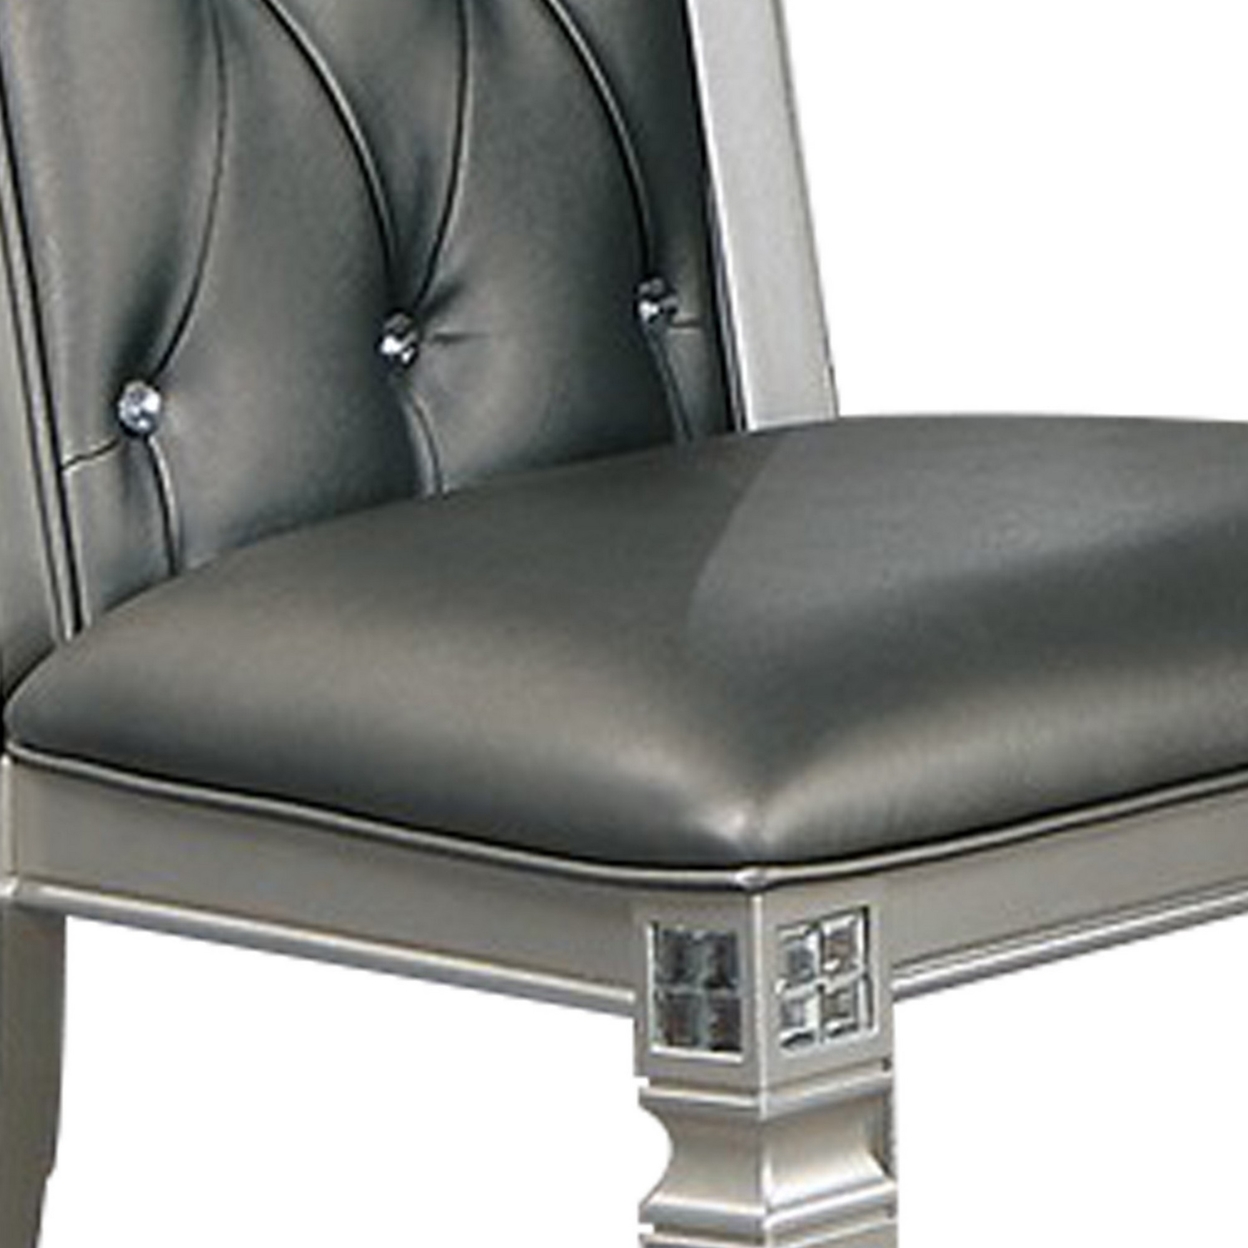 Neil 24 Inch Modern Dining Side Chair, Vegan Faux Leather, Set Of 2, Silver- Saltoro Sherpi